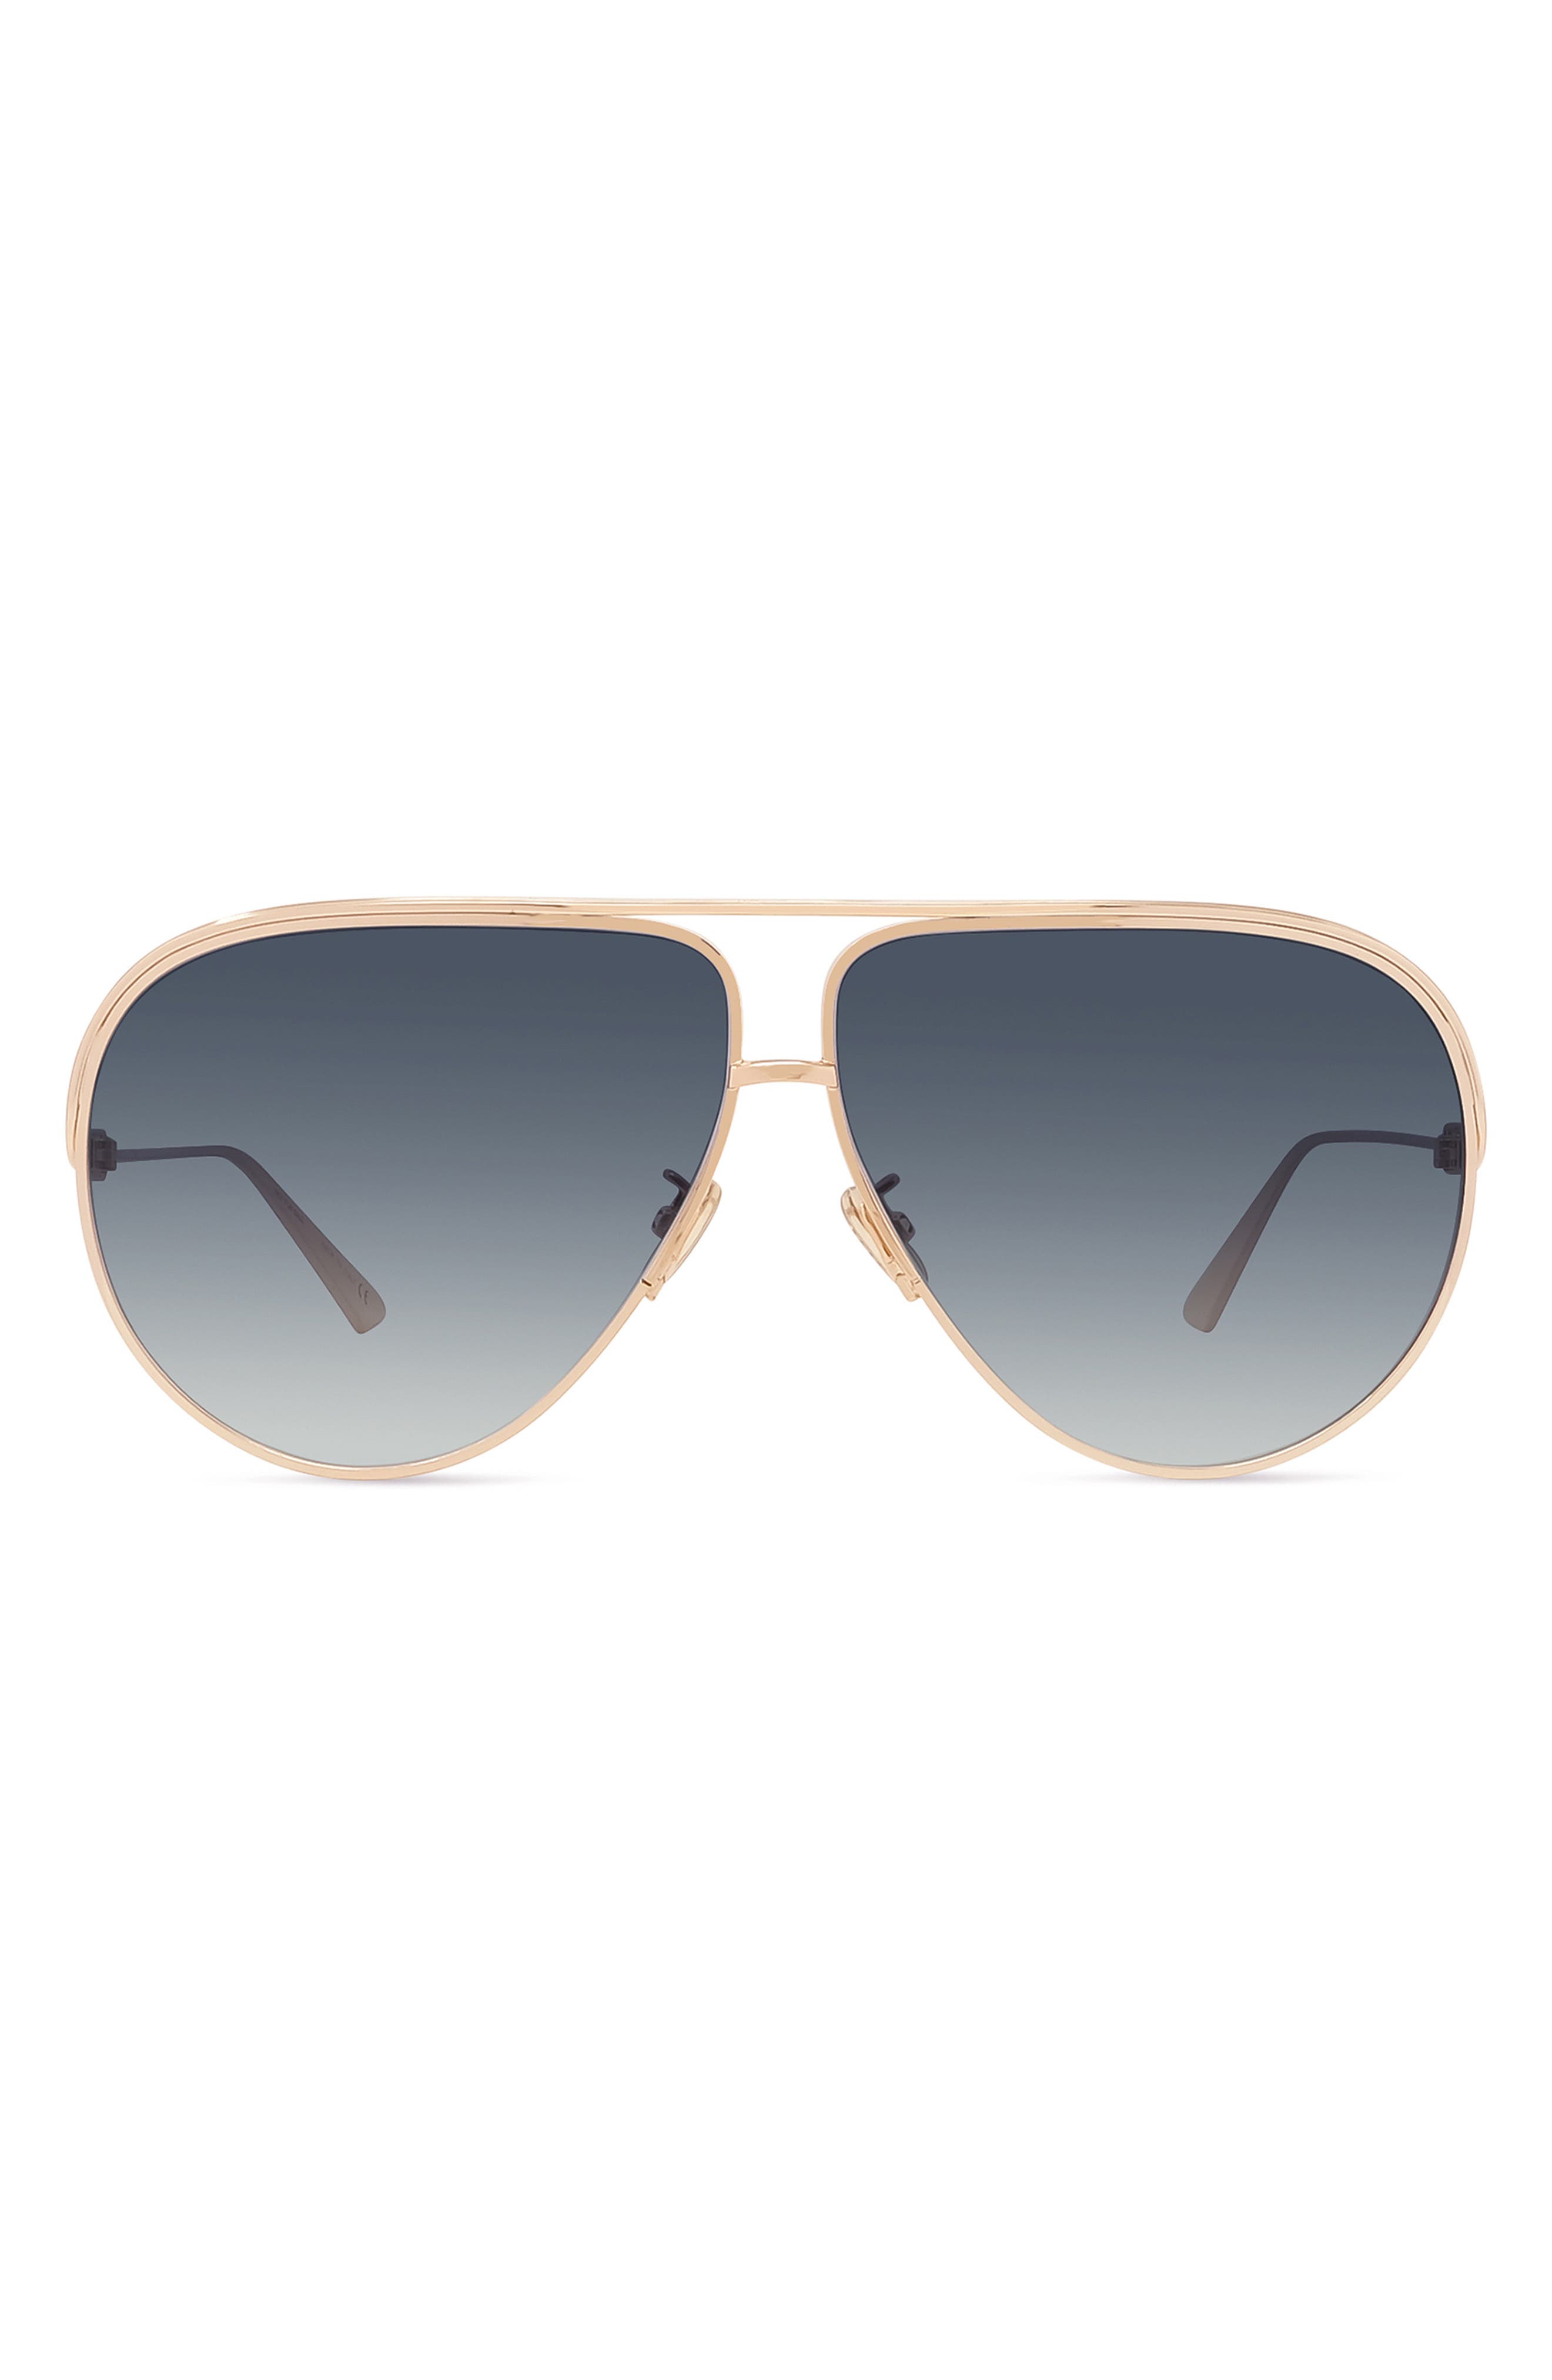 dior sunglasses polarized